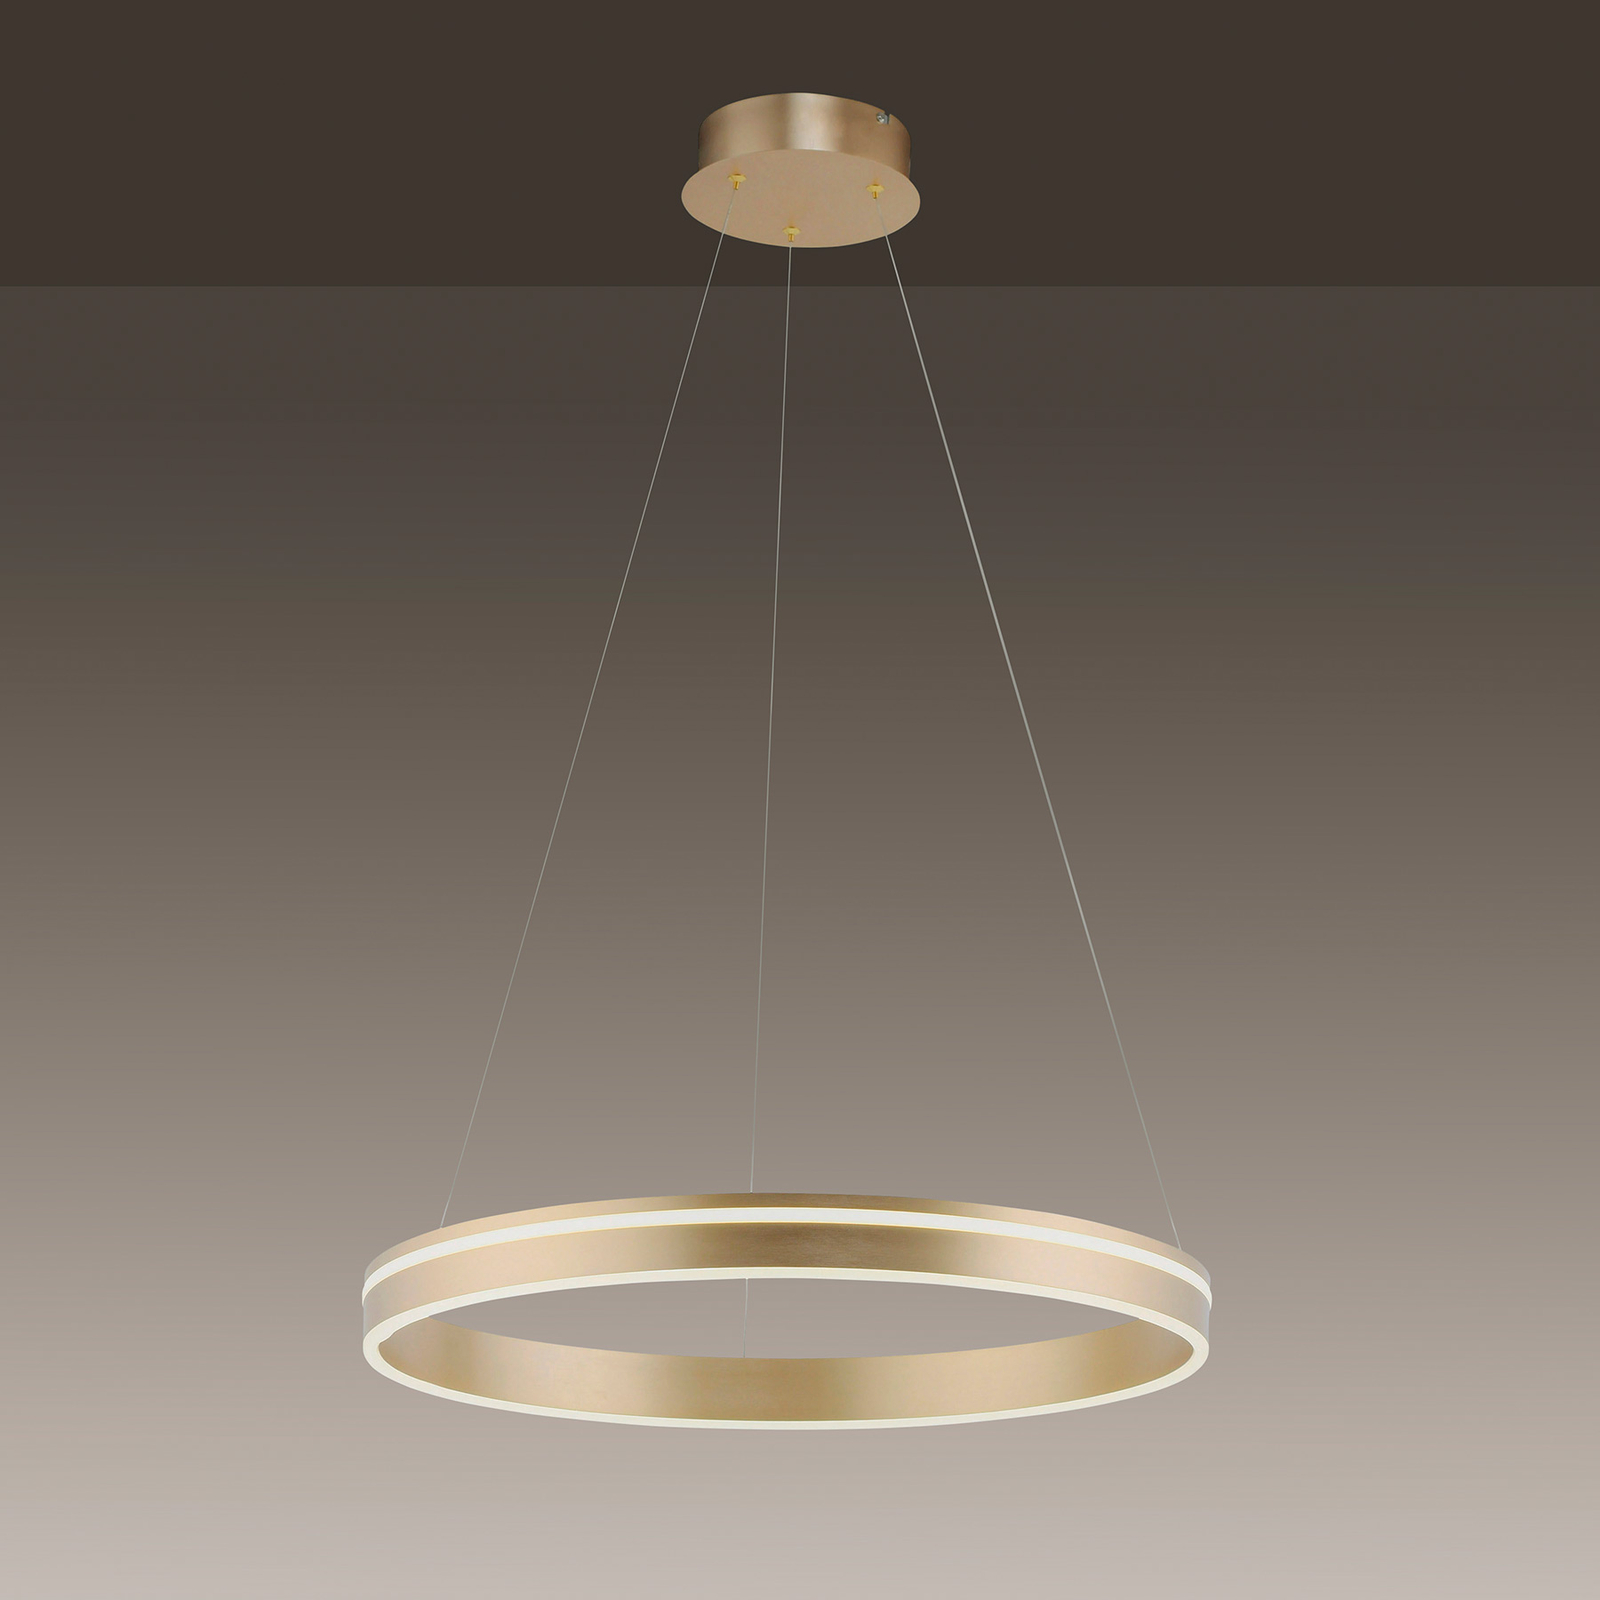 Paul Neuhaus Q-VITO LED hanglamp, 1 ring